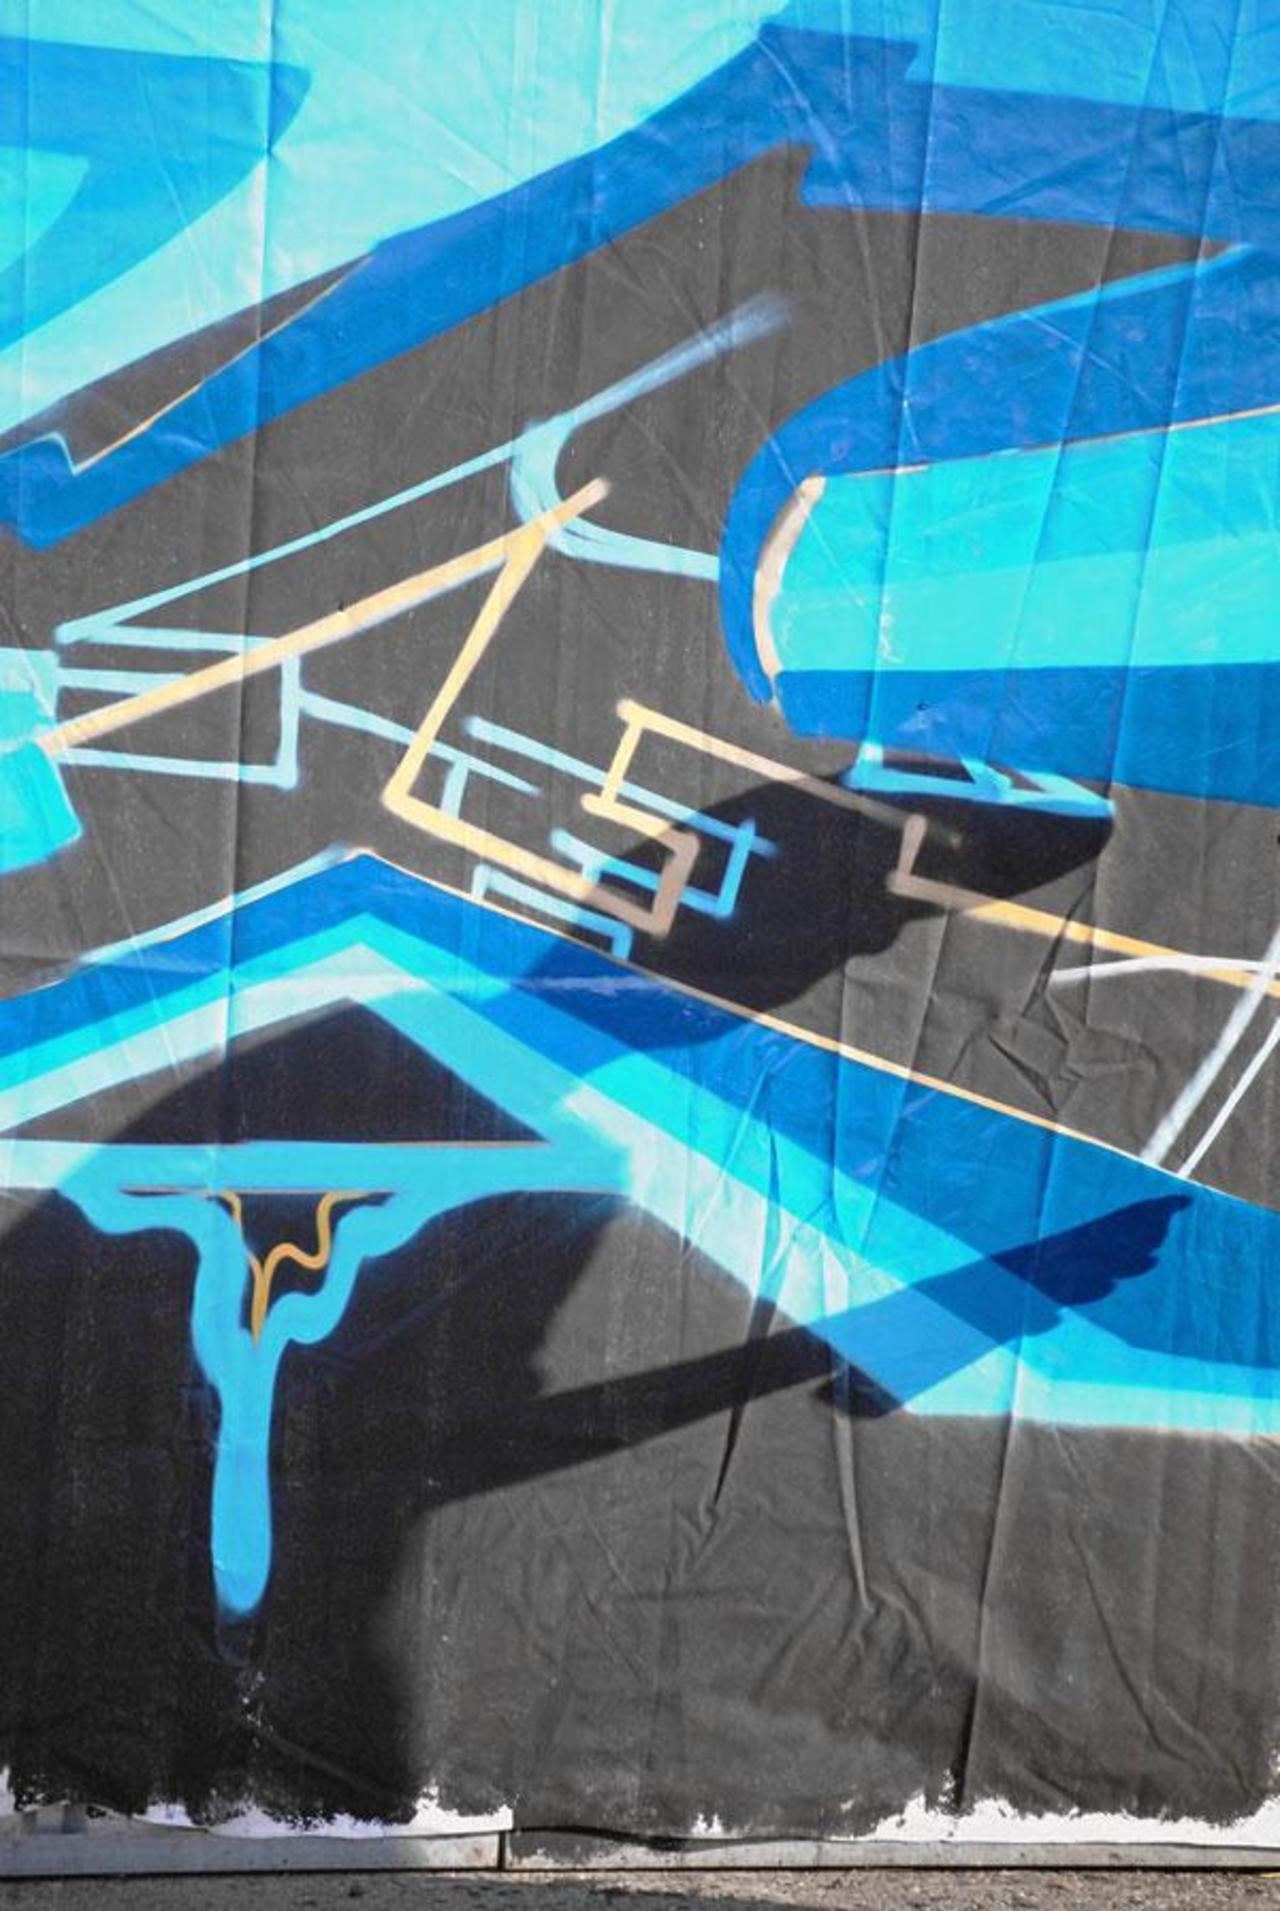 shade of #spray #urbanart #streetart #graffiti #streetphotography http://t.co/99S2VcEwS3